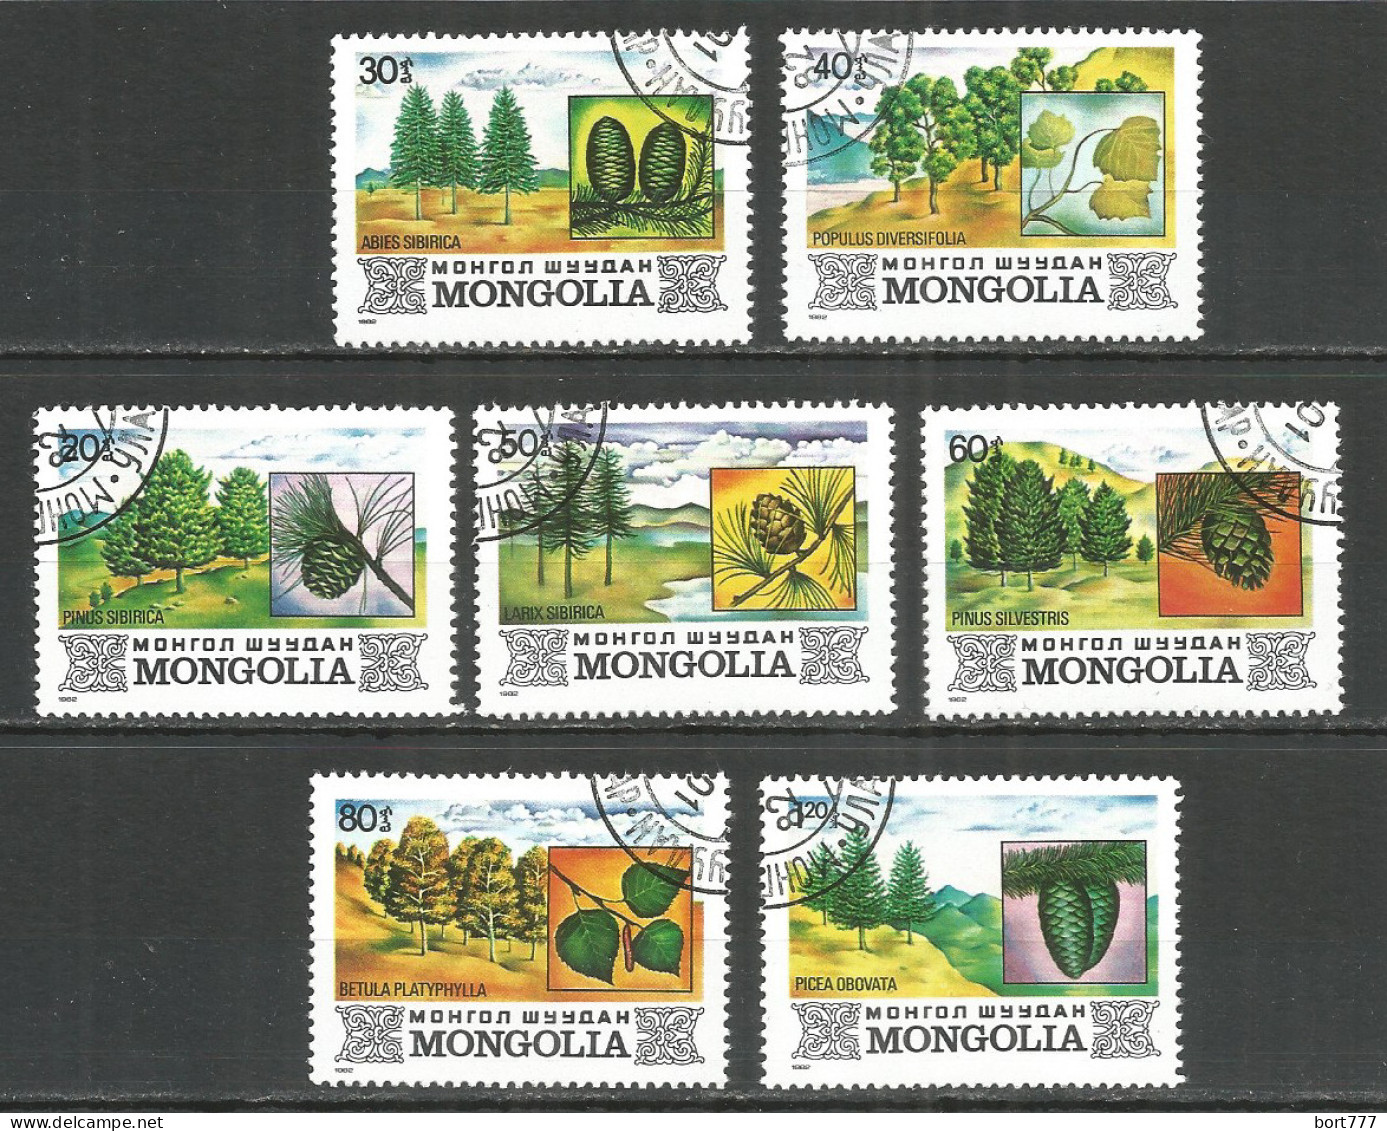 Mongolia 1982 Used Stamps CTO  - Mongolia